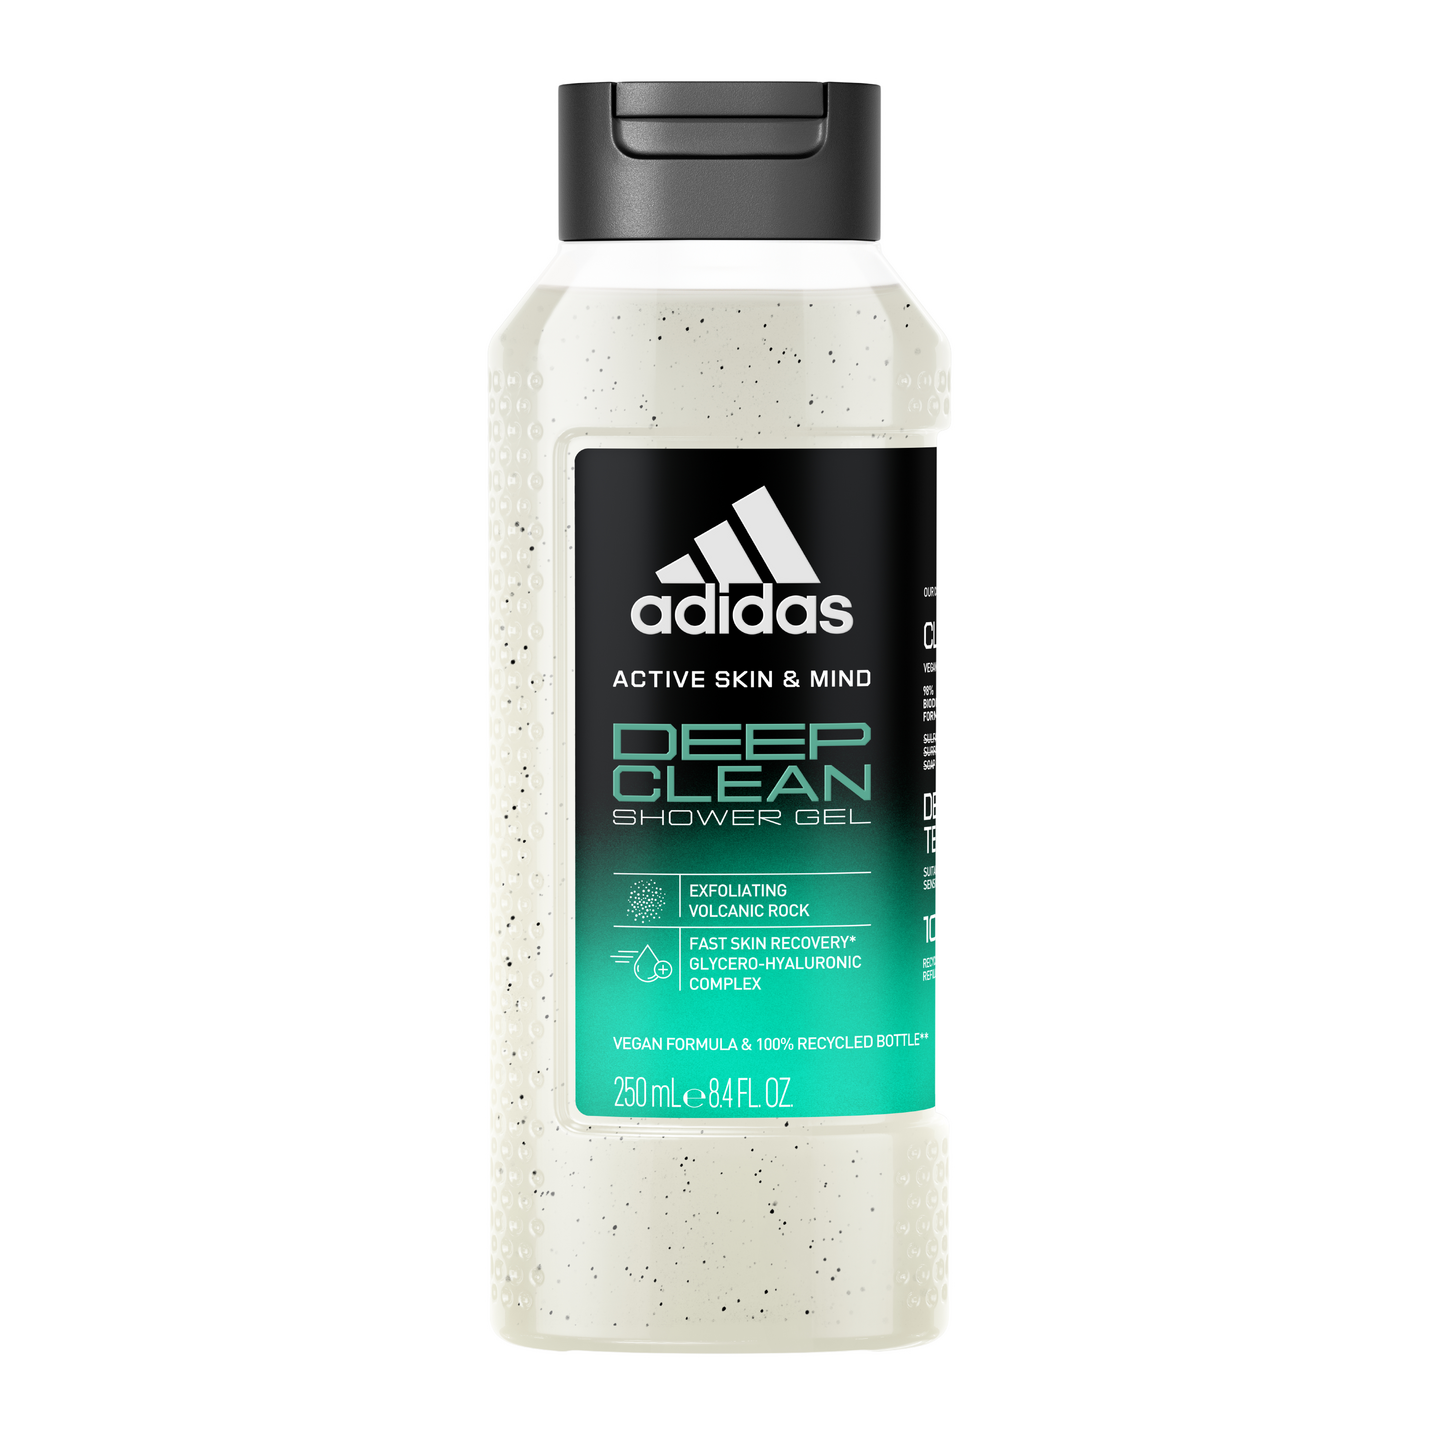 Adidas Active Skin & Mind Suihkugeeli 250ml Deep Clean